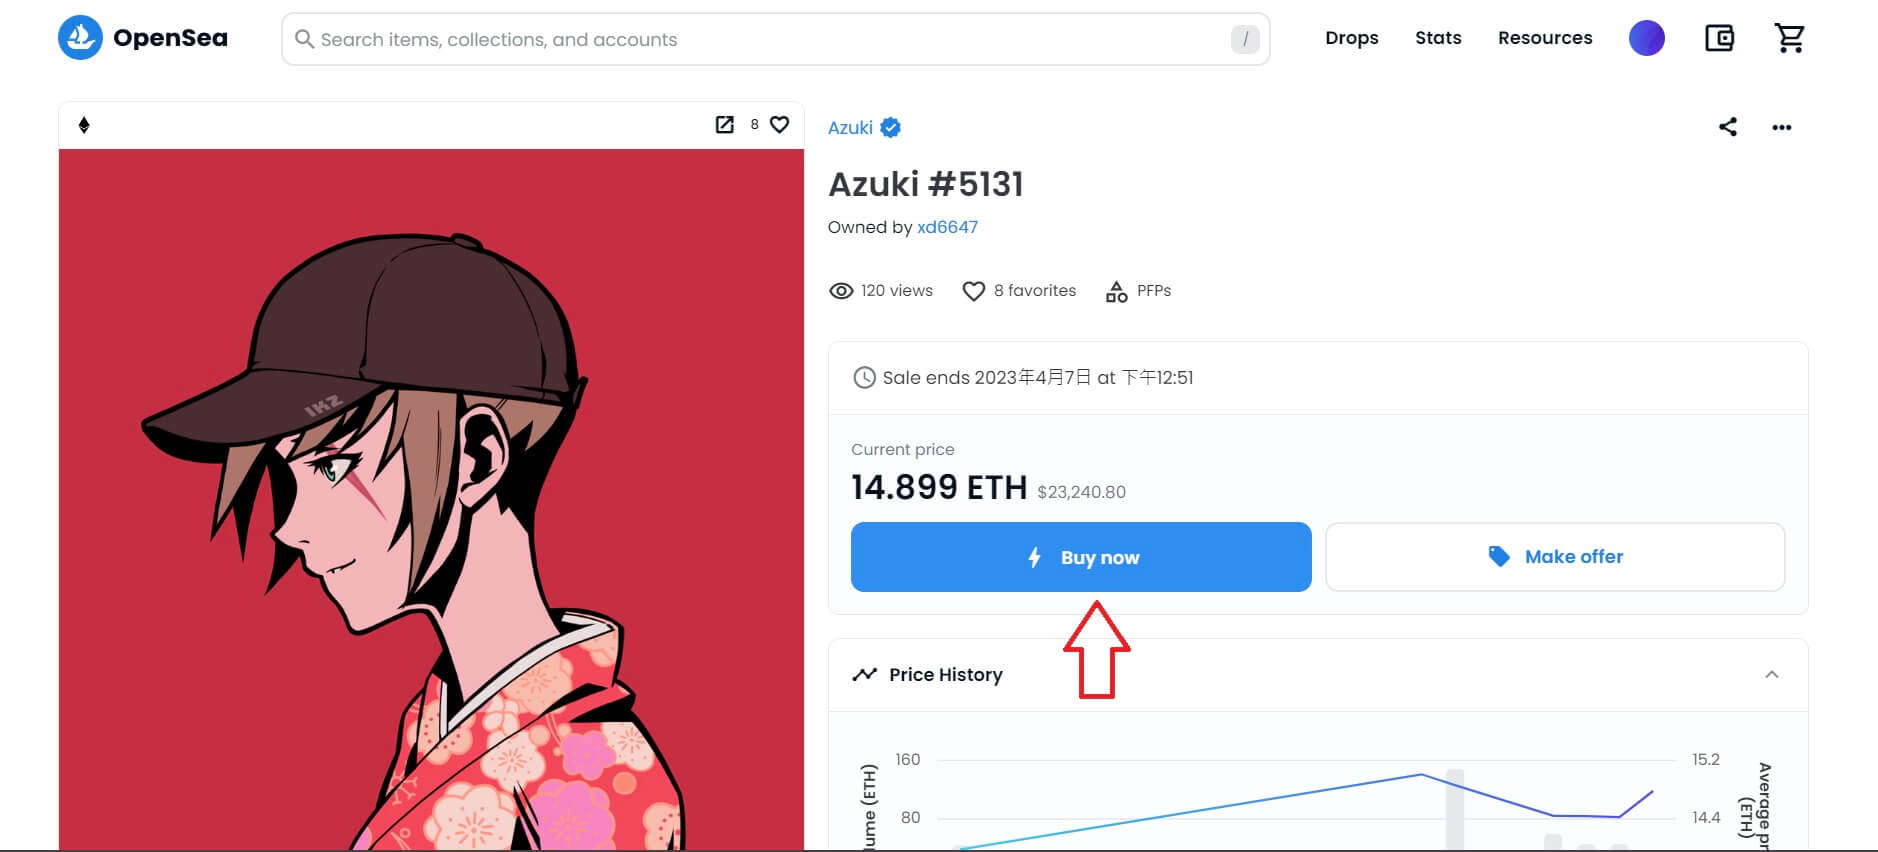 click "Buy Now" to buy "Azuki #5131"